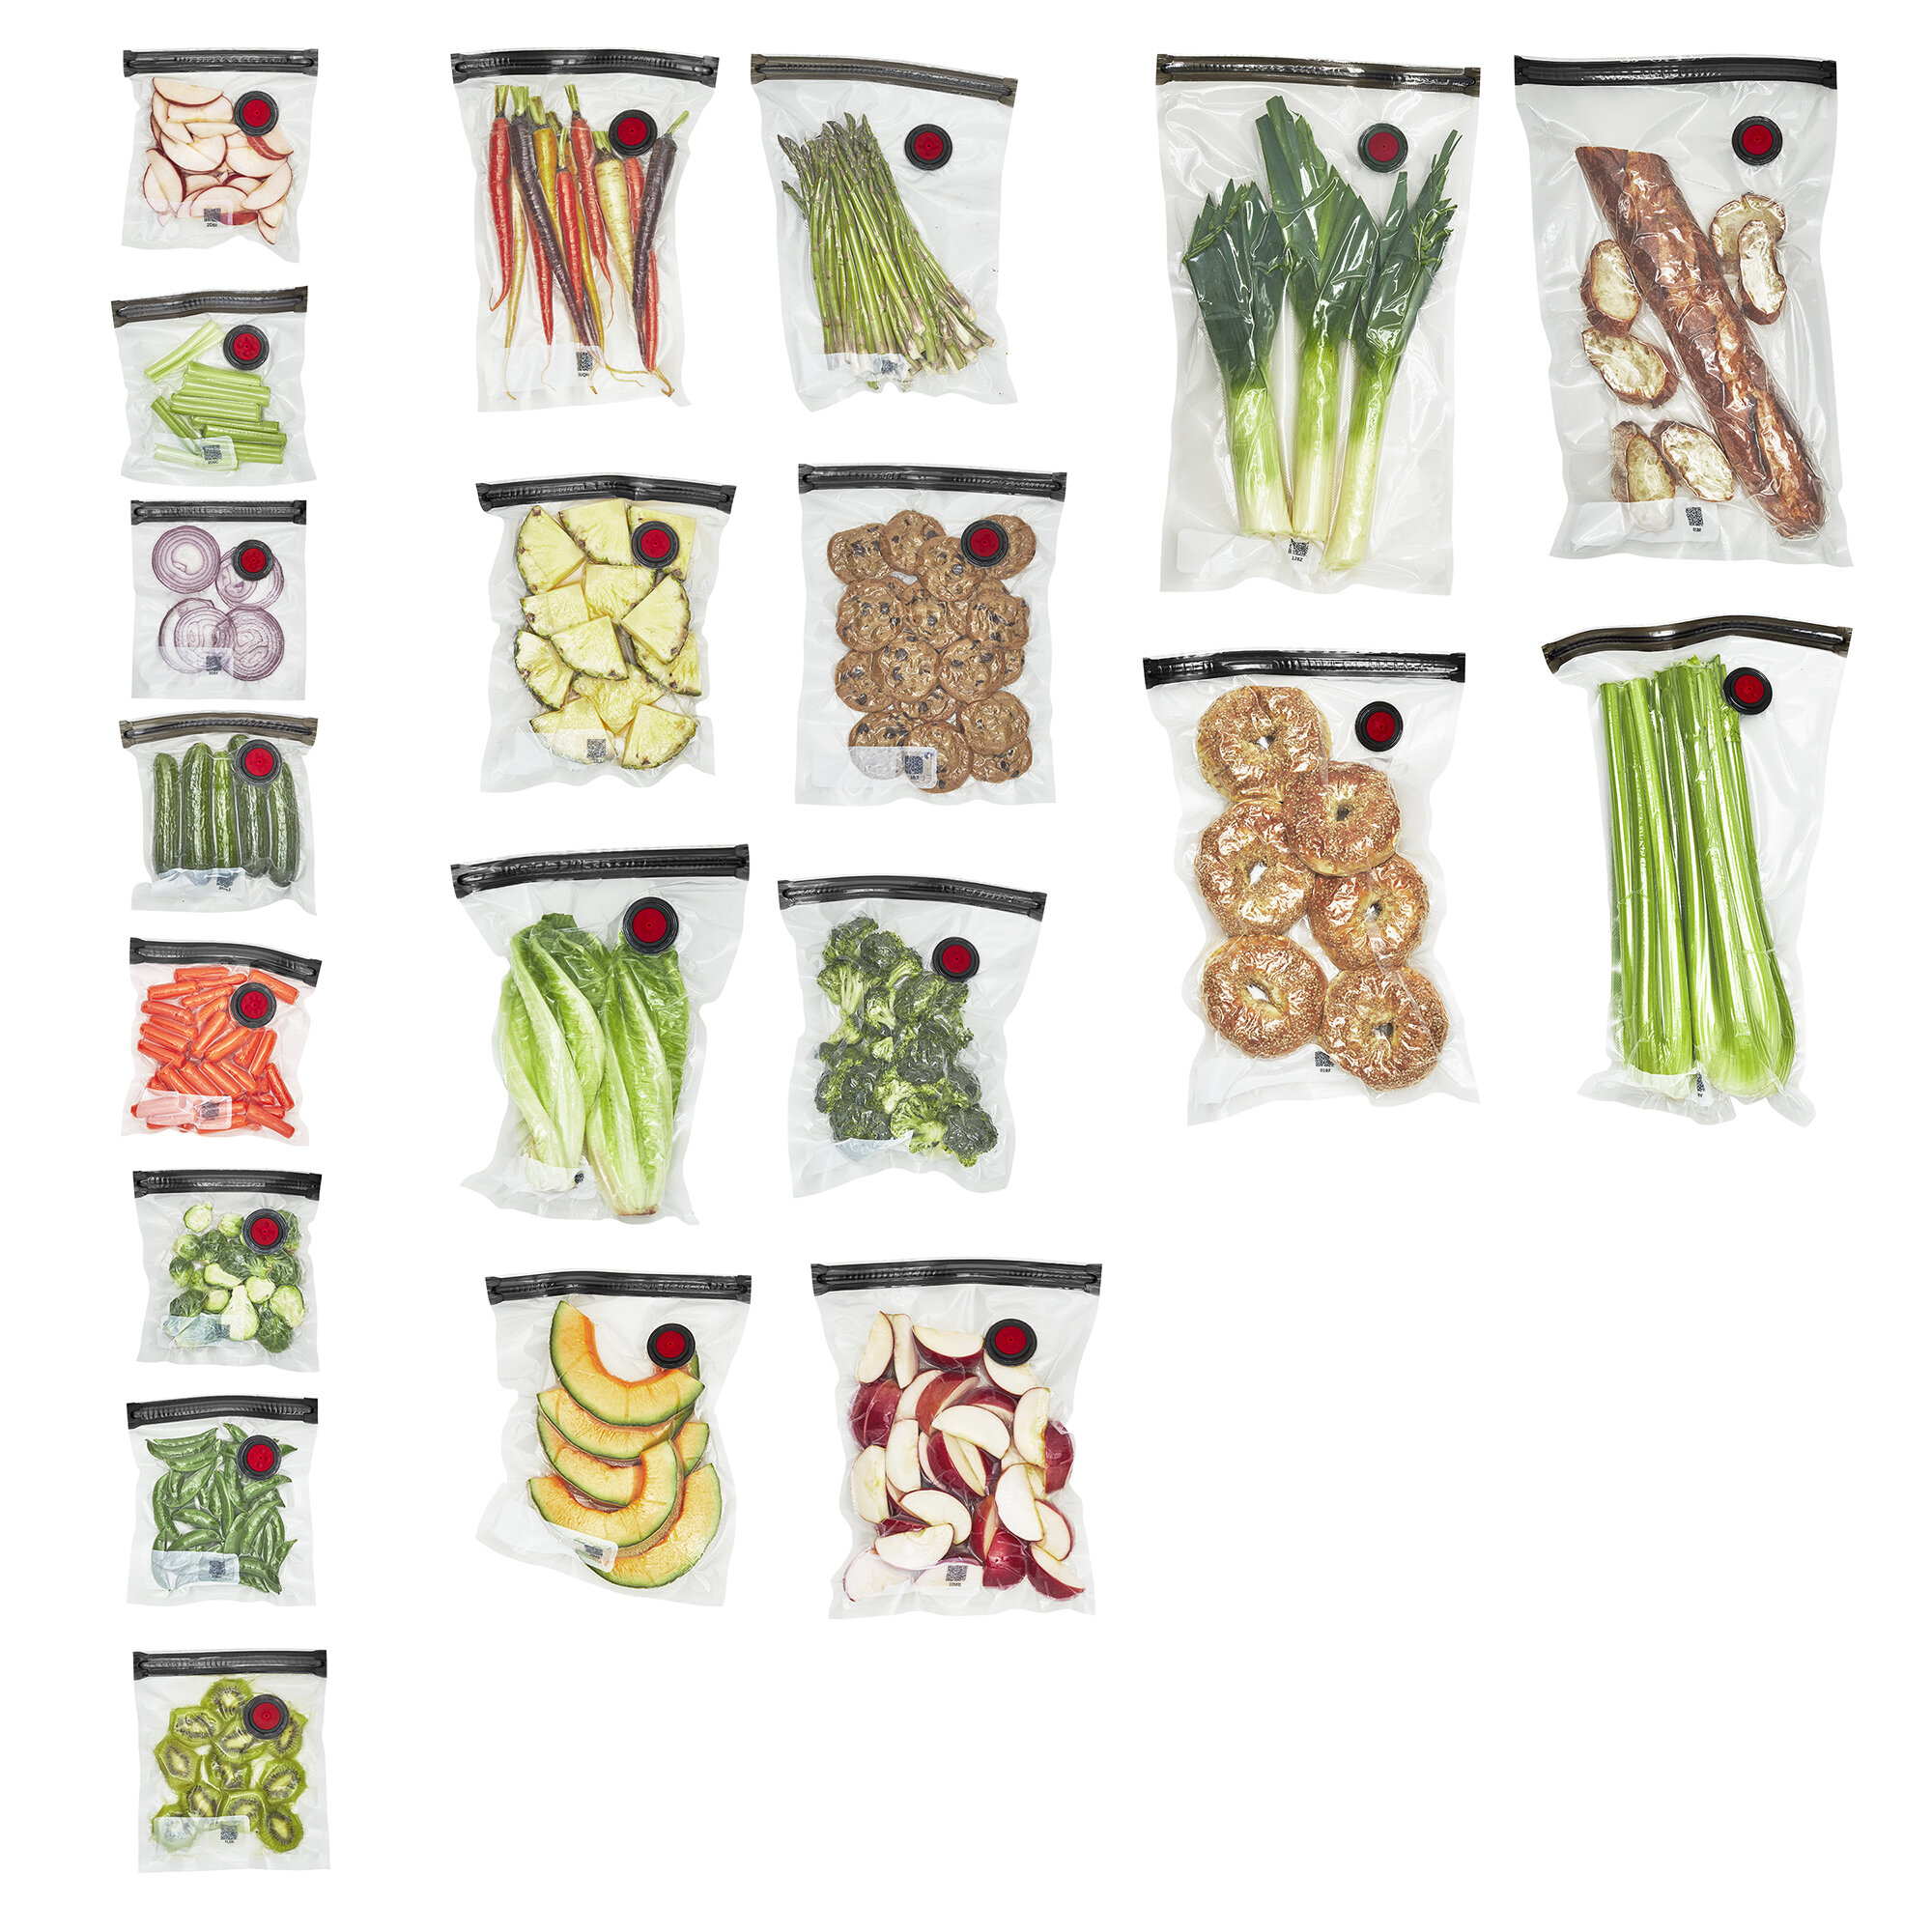 FoodSaver Vacuum Food Sealer With Assorted Bags